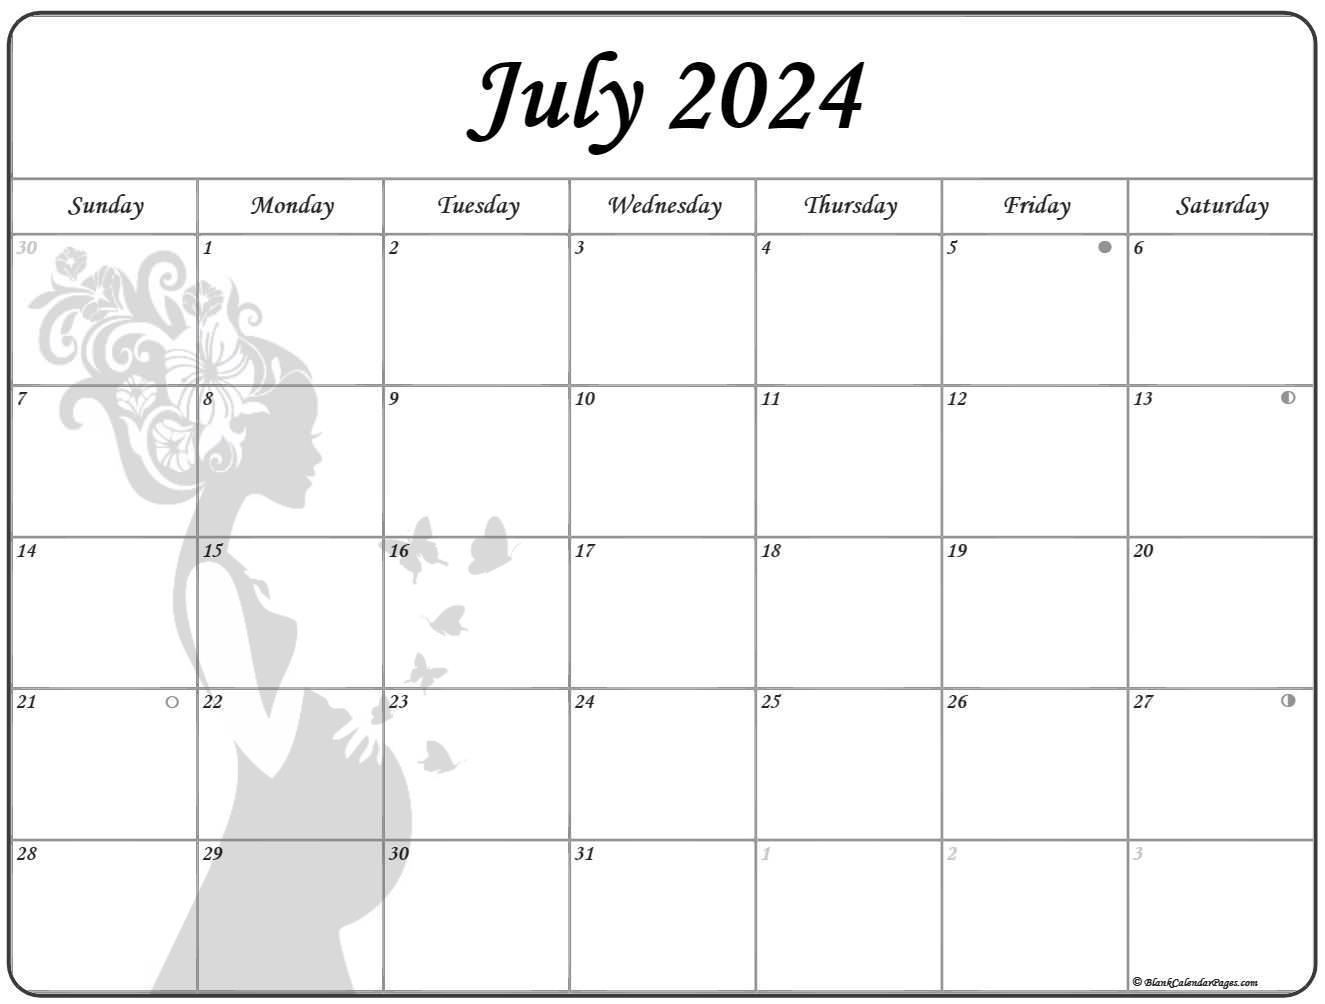 July 2022 Pregnancy Calendar Fertility Calendar